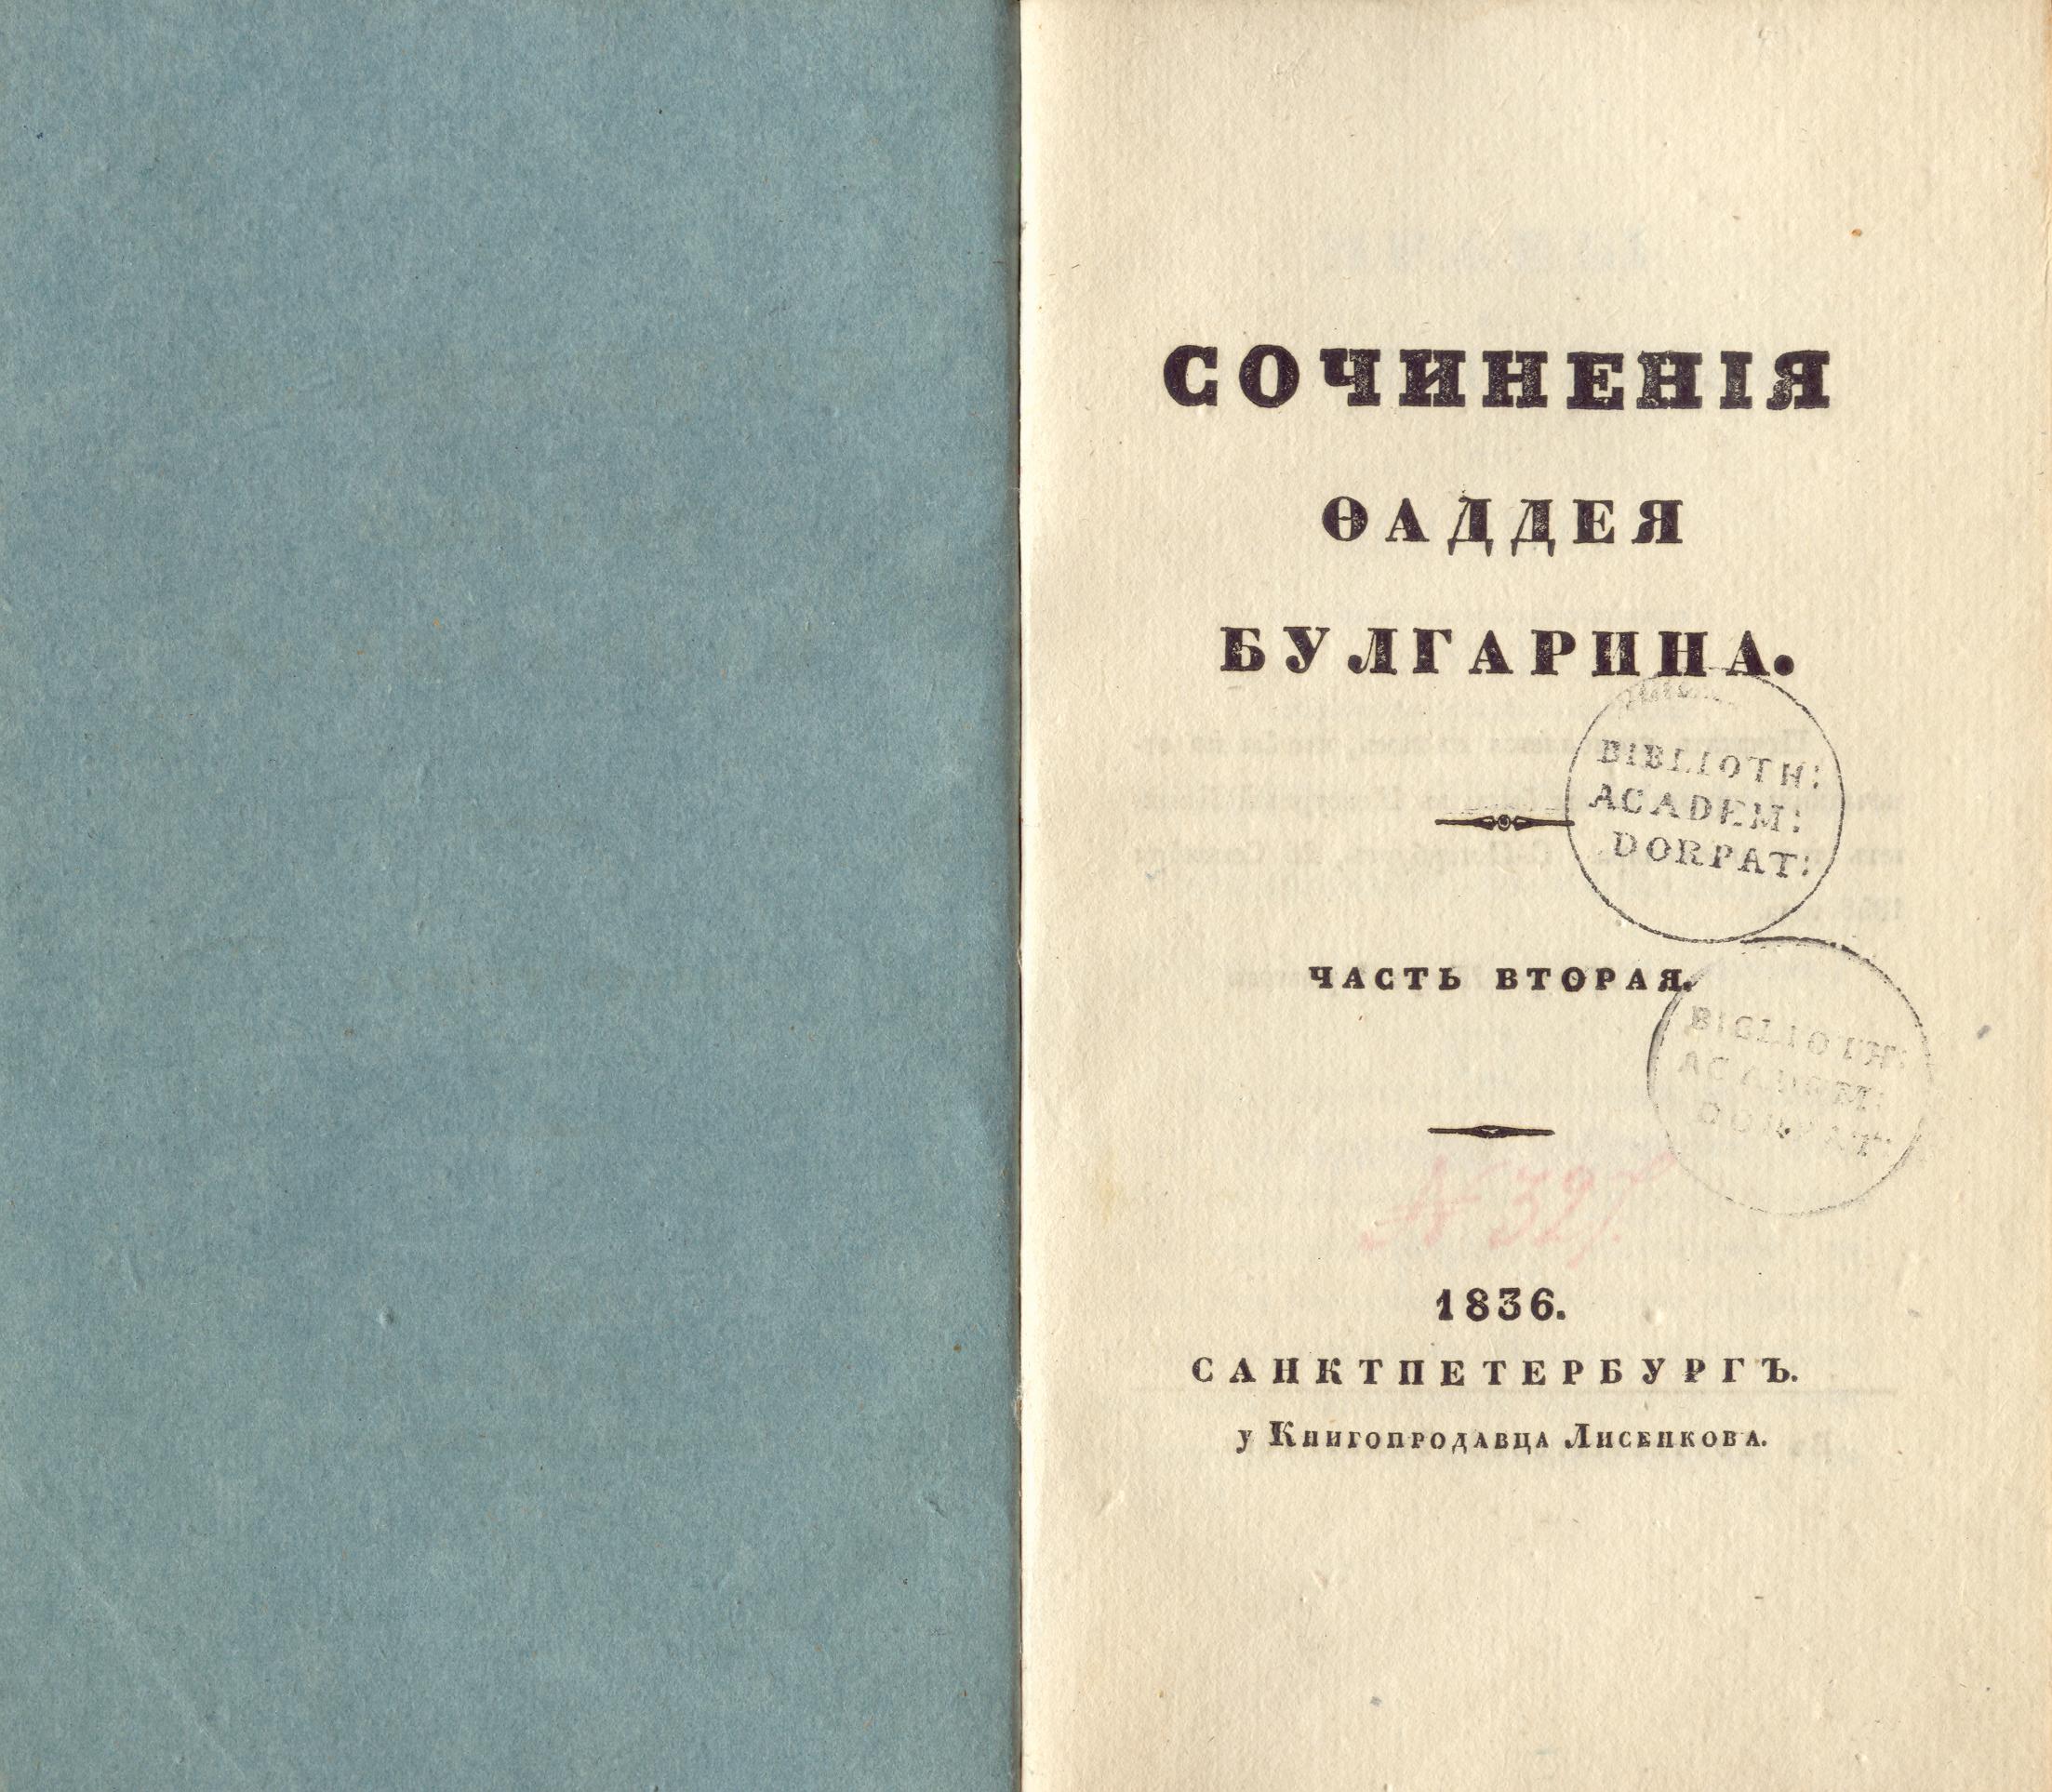 Сочиненія [2] (1836) | 2. Титульный лист